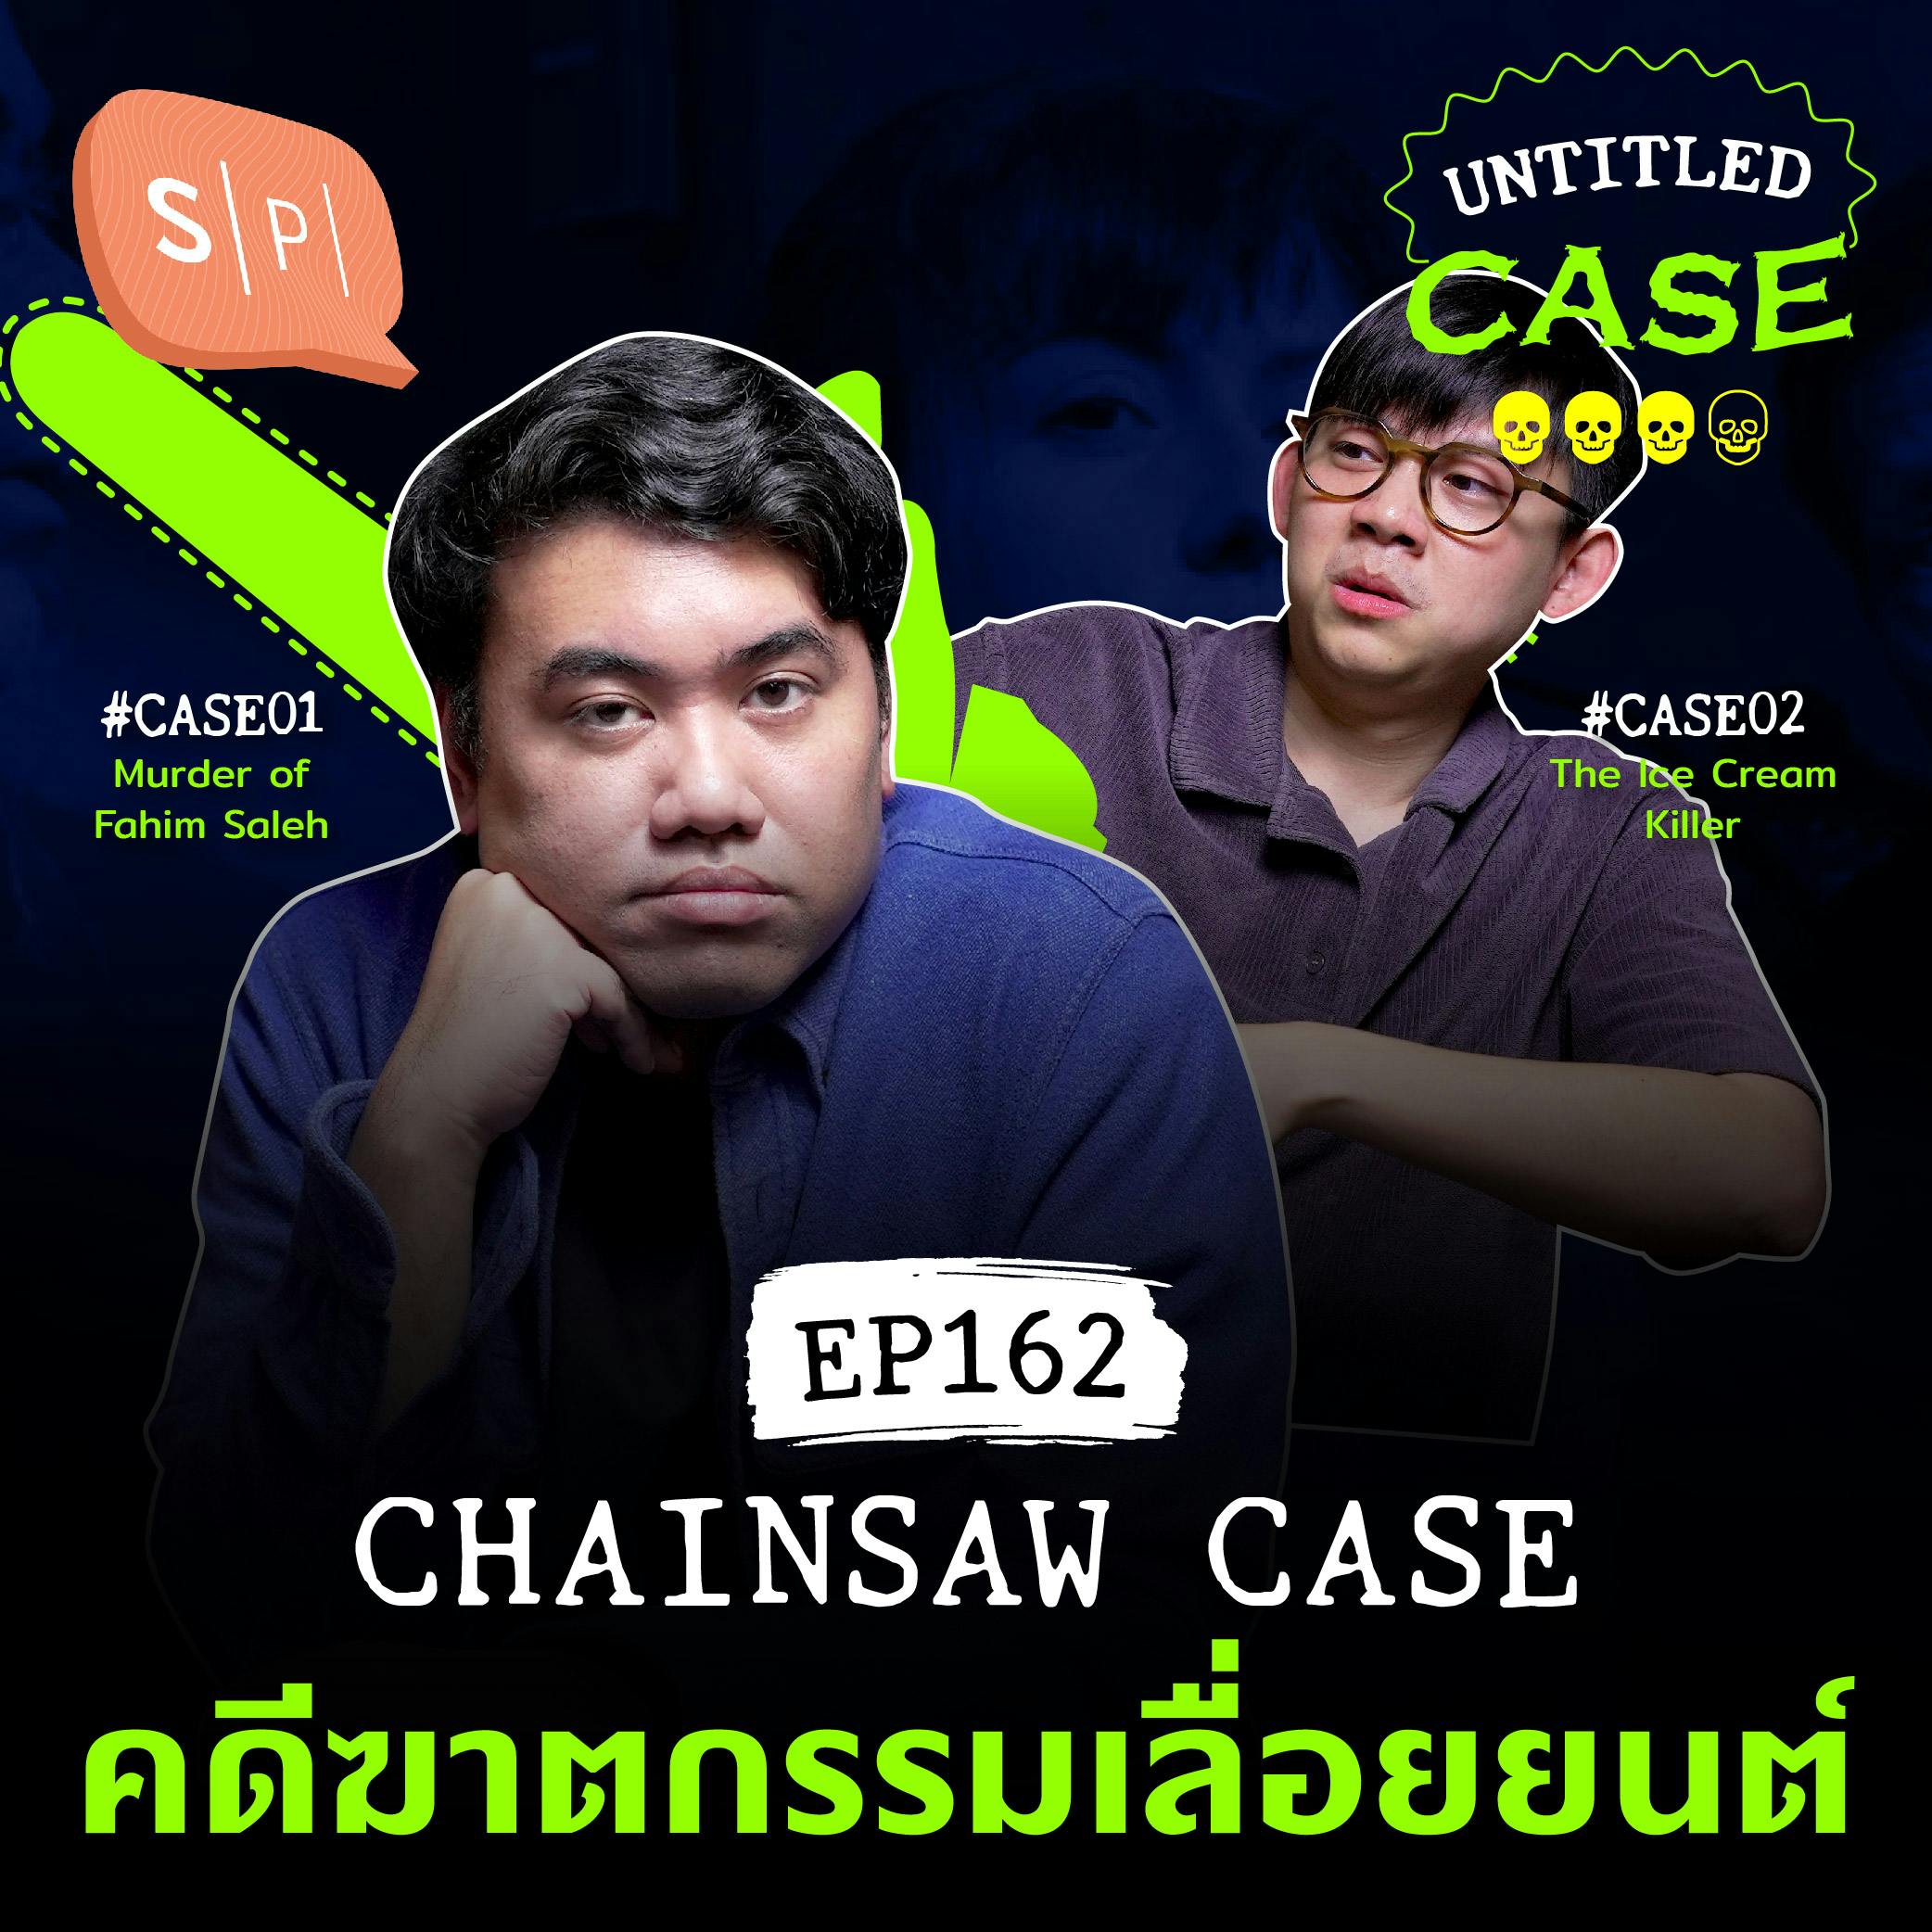 Chainsaw case คดีฆาตกรรมเลื่อยยนต์ | Untitled Case EP162